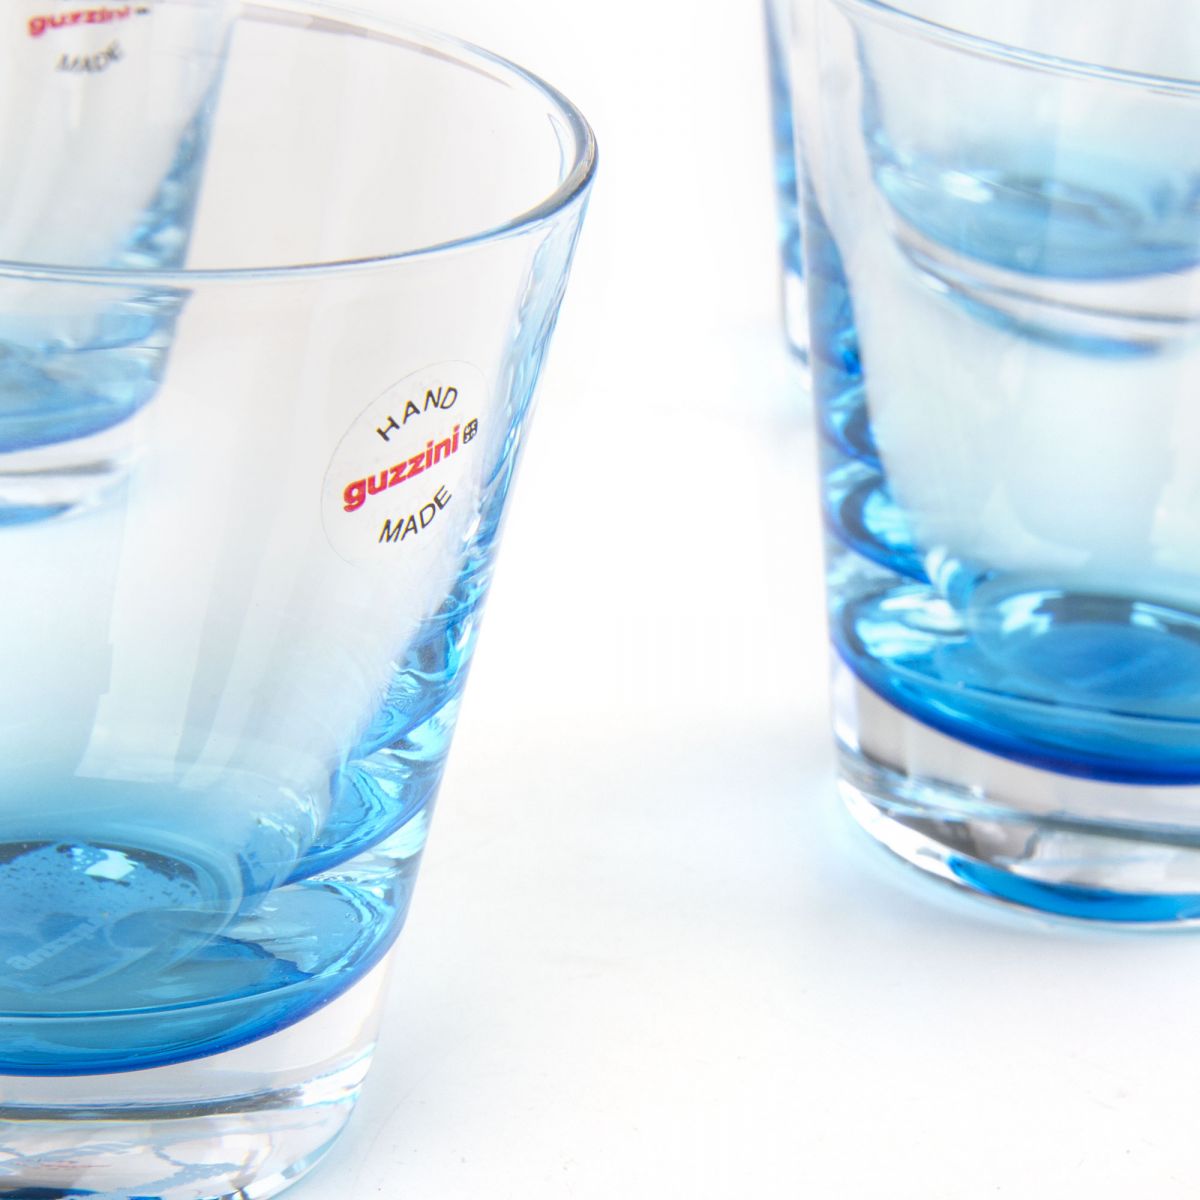 Lot de 6 verres   eau  bicolores GUZZINI  prix d griff 